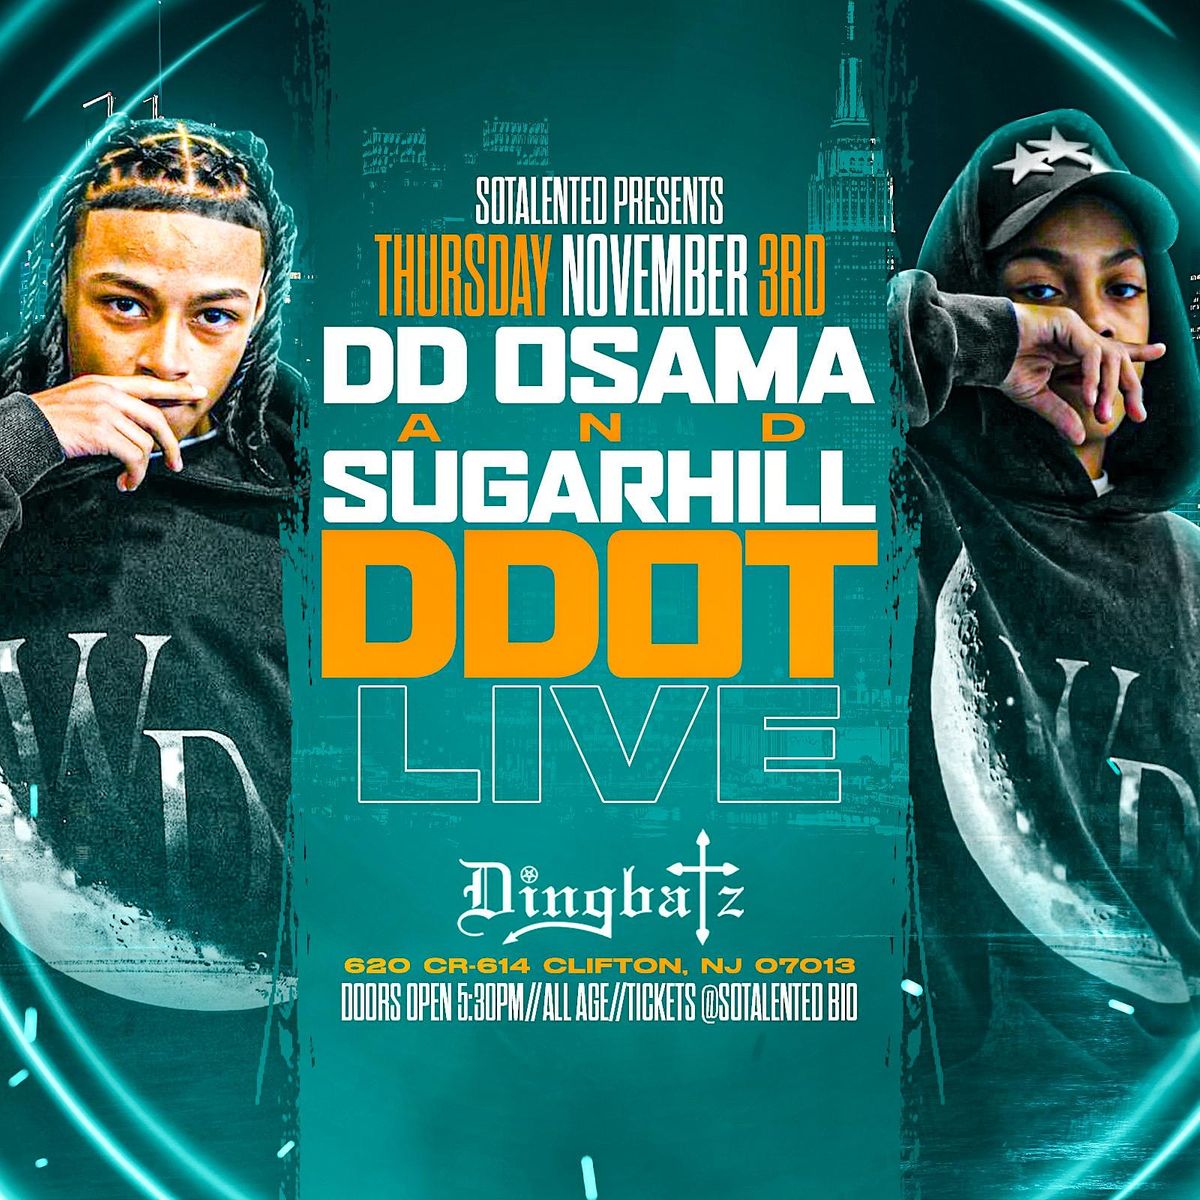 DD Osama & SugarHill DDot Concert New Jersey November 3rd Dingbatz